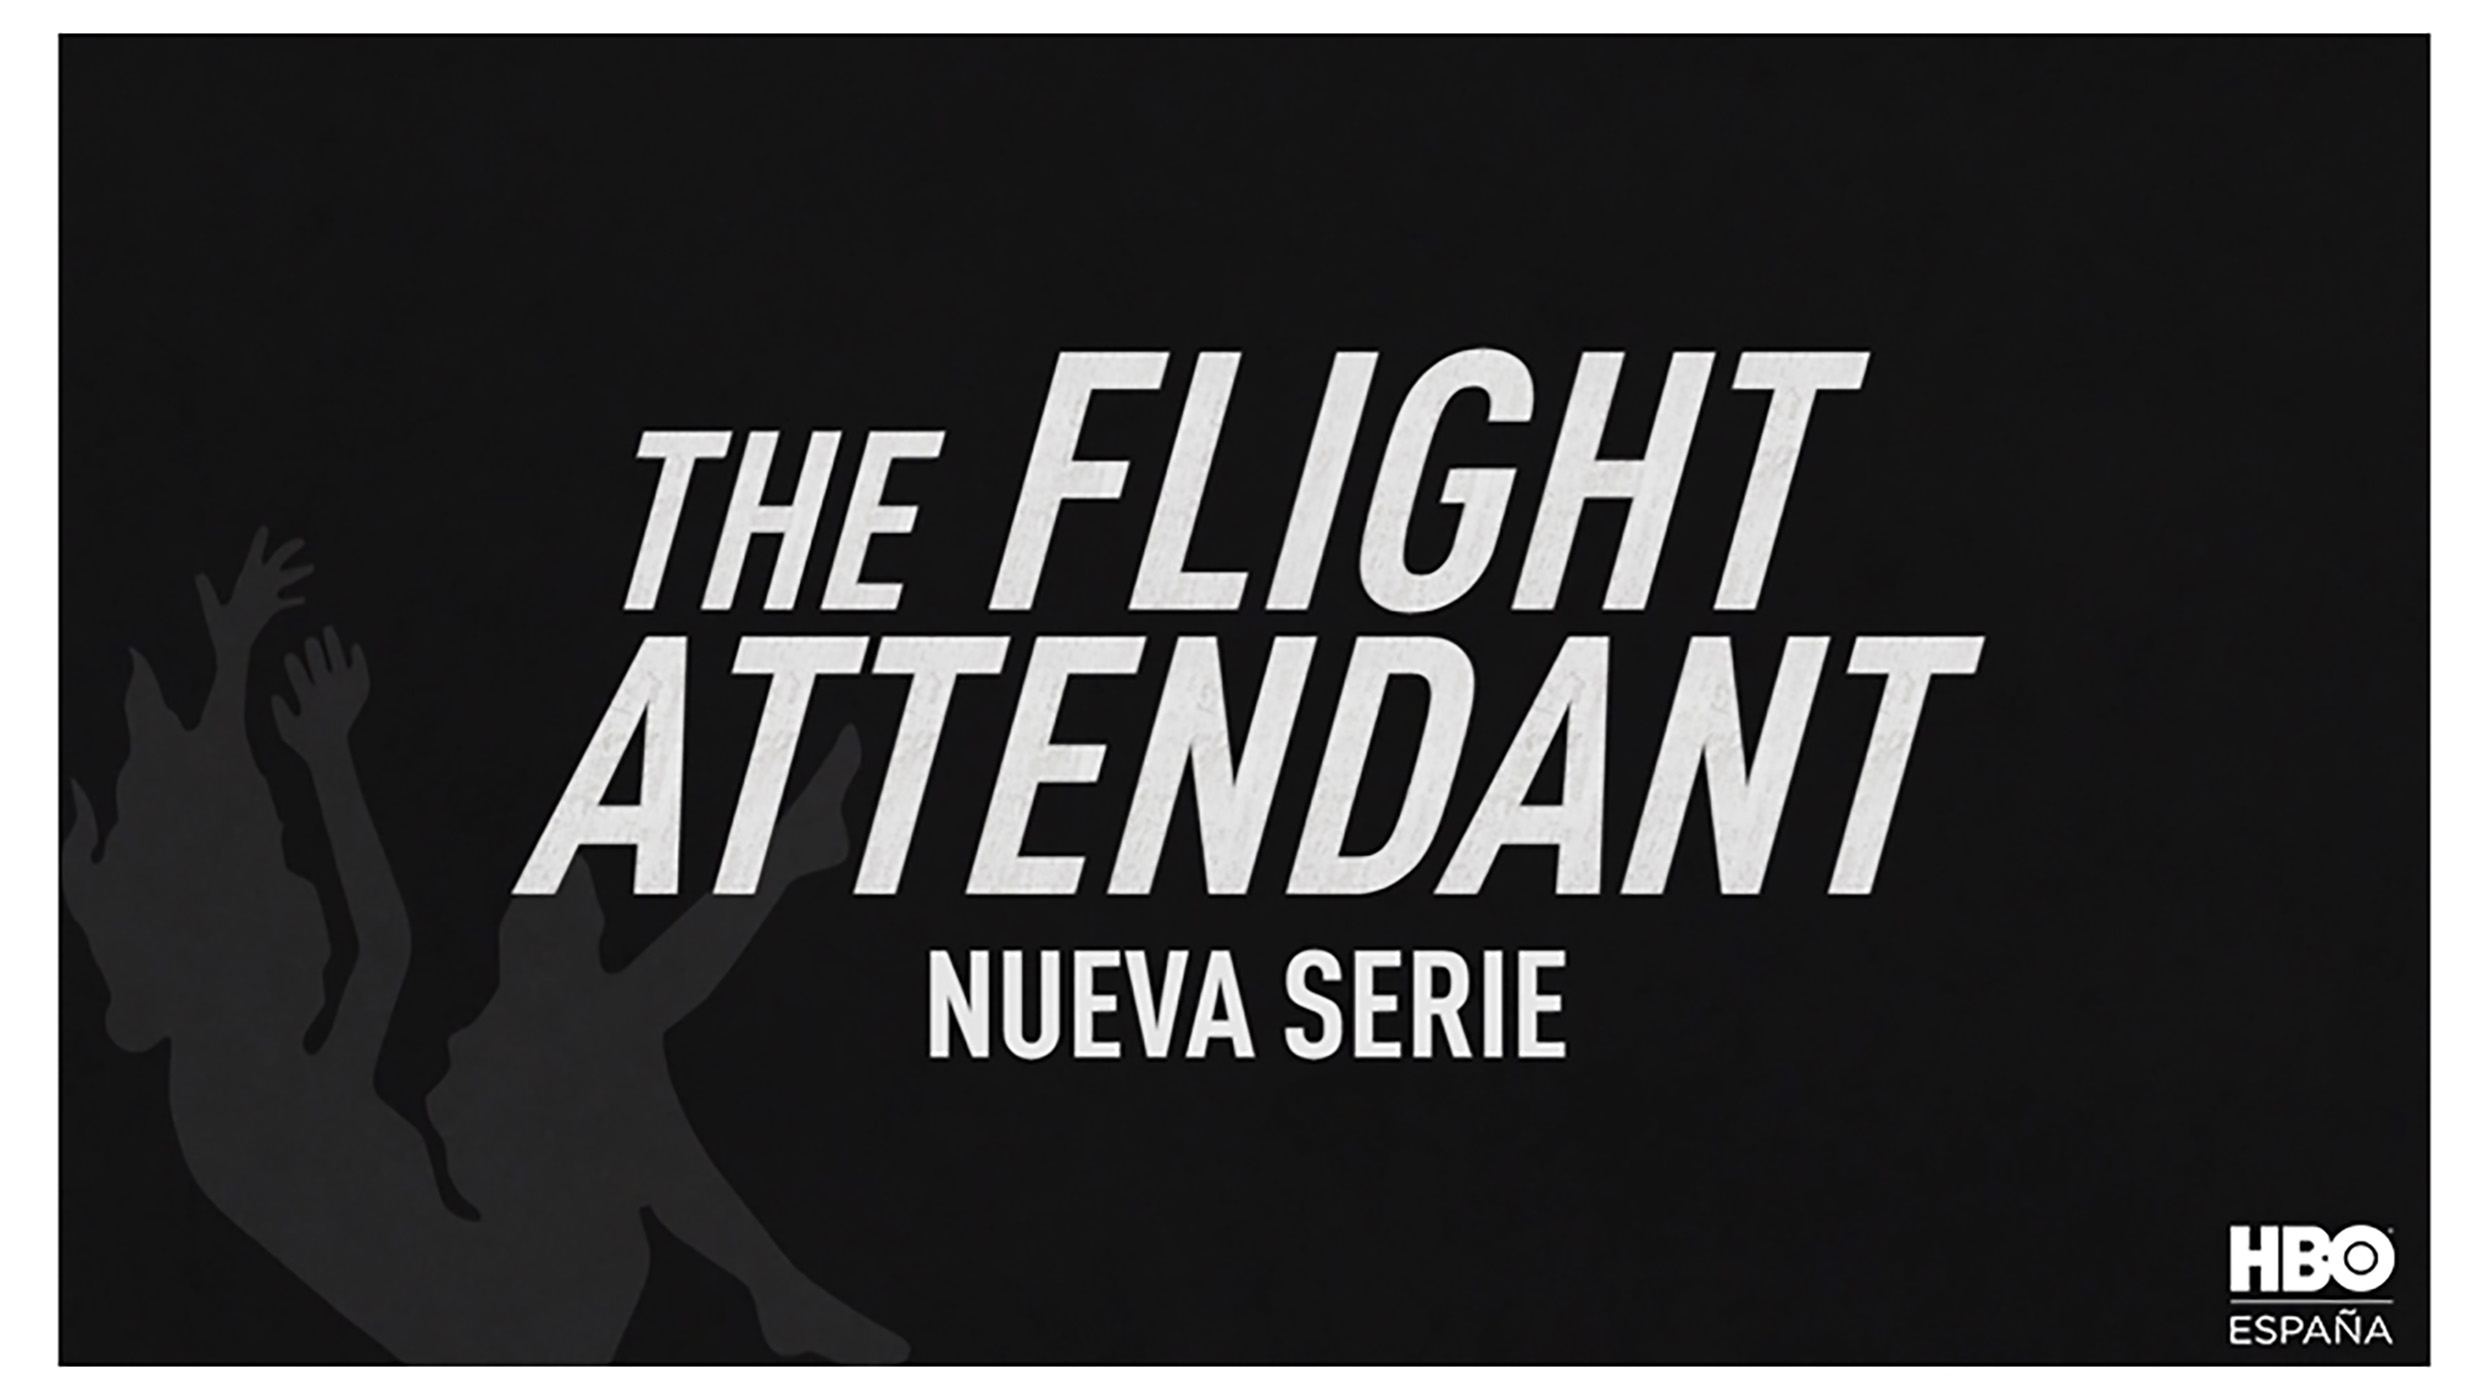 The flight attendant